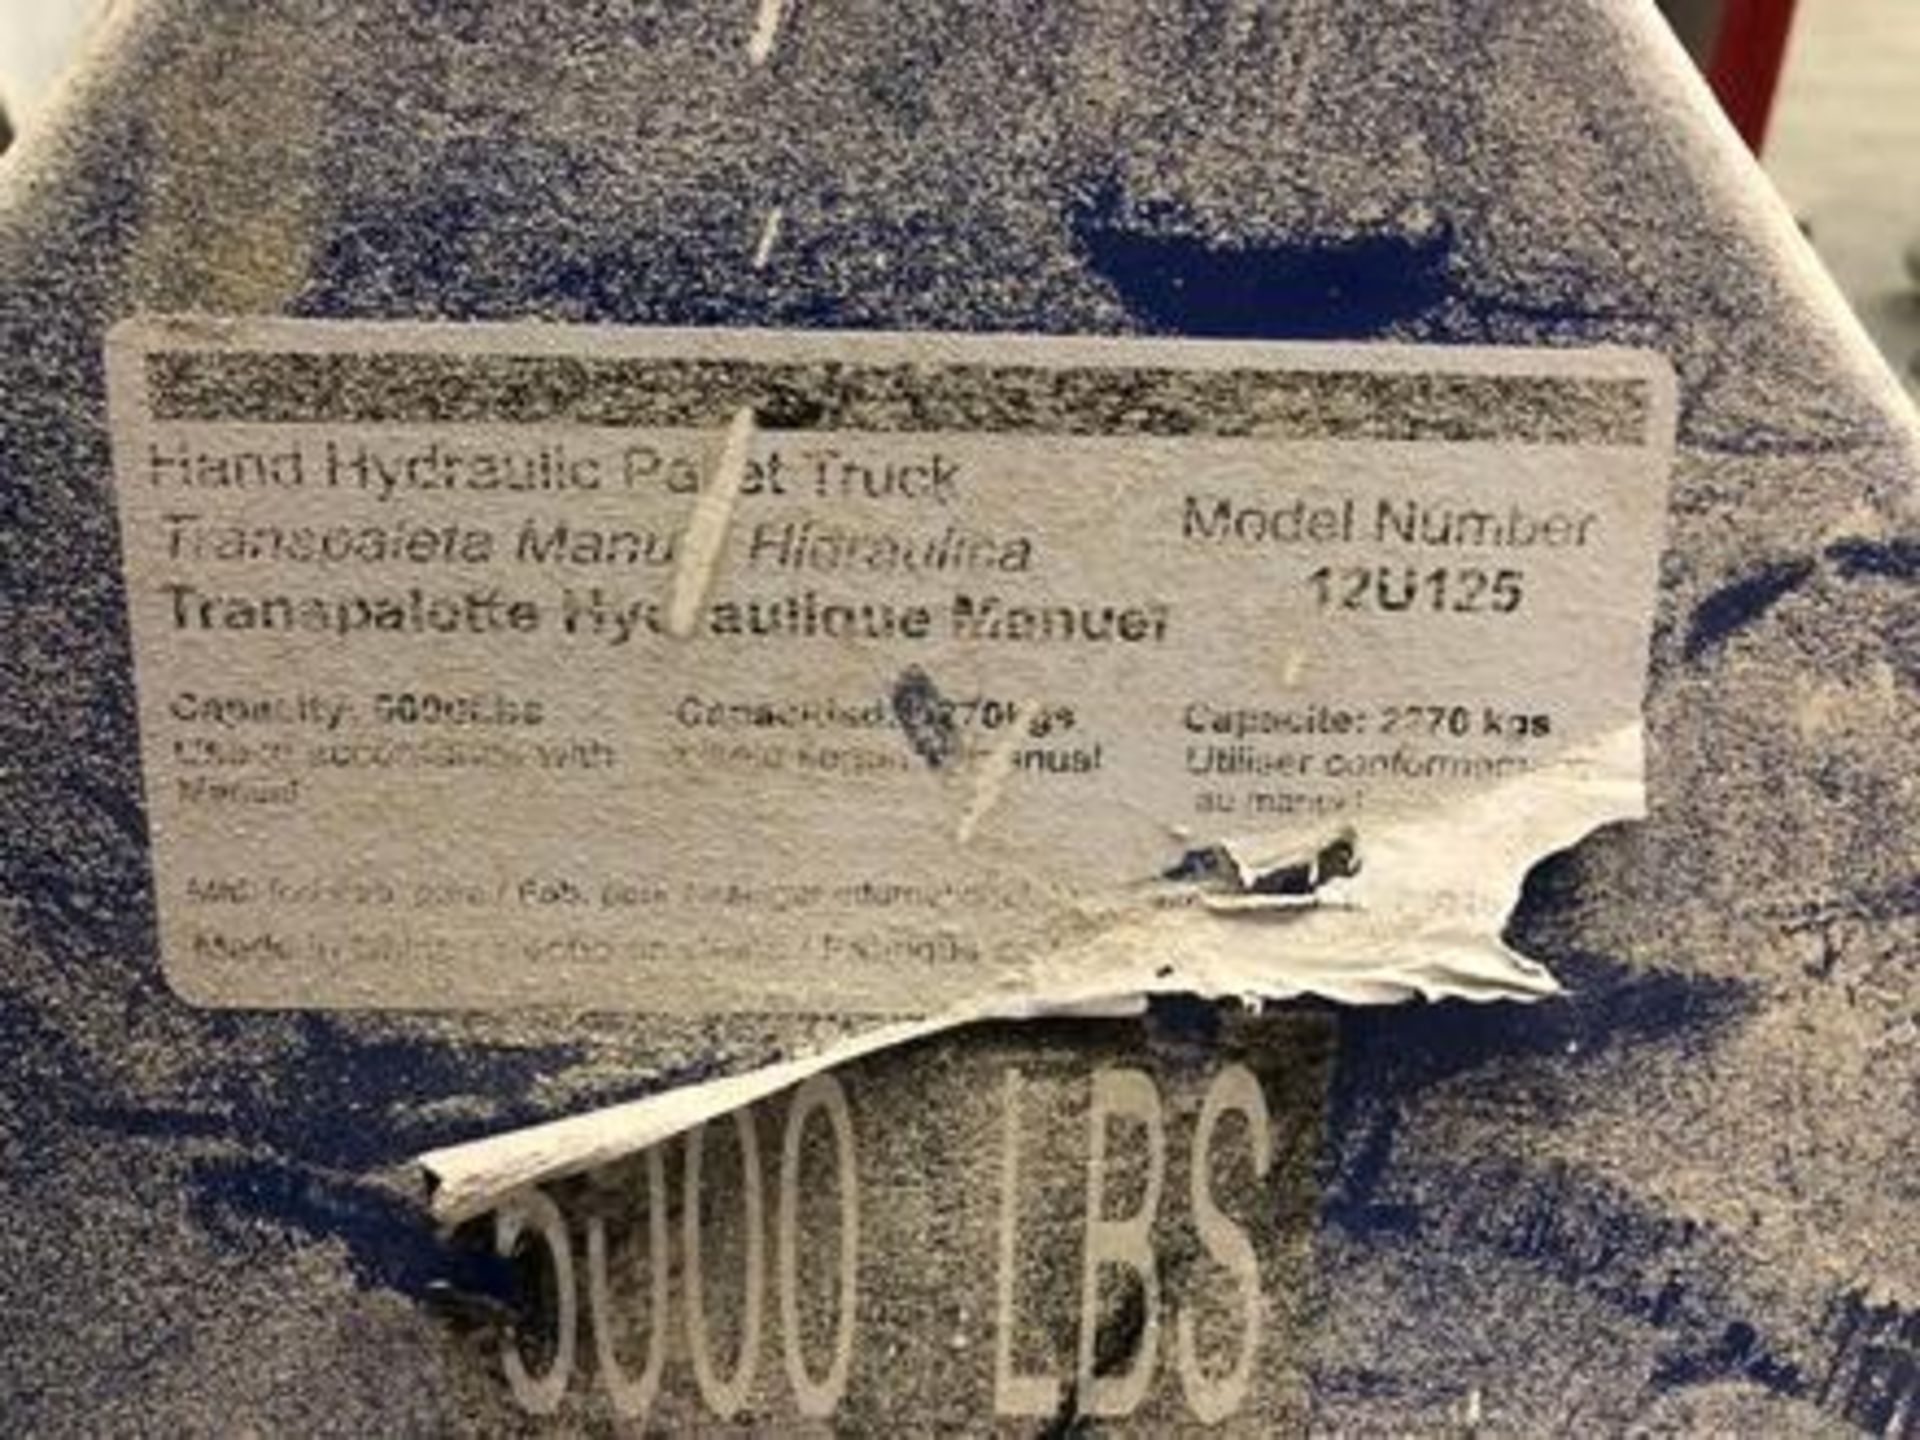 (2) Industrial 5,000 & 4,400 Lbs. Cap. 12U125 Hydraulic Pallet Jacks, size 48 x 27", Blue - Image 4 of 4